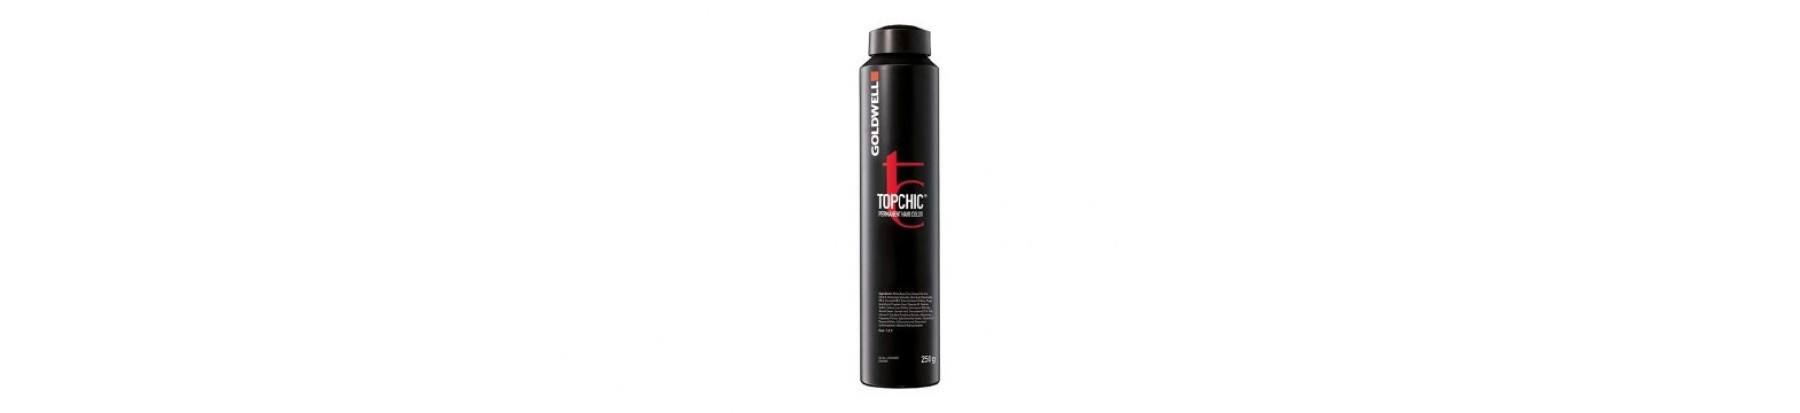 TOPCHIC – стойкая краска для волос (баллоны, 250 мл.)